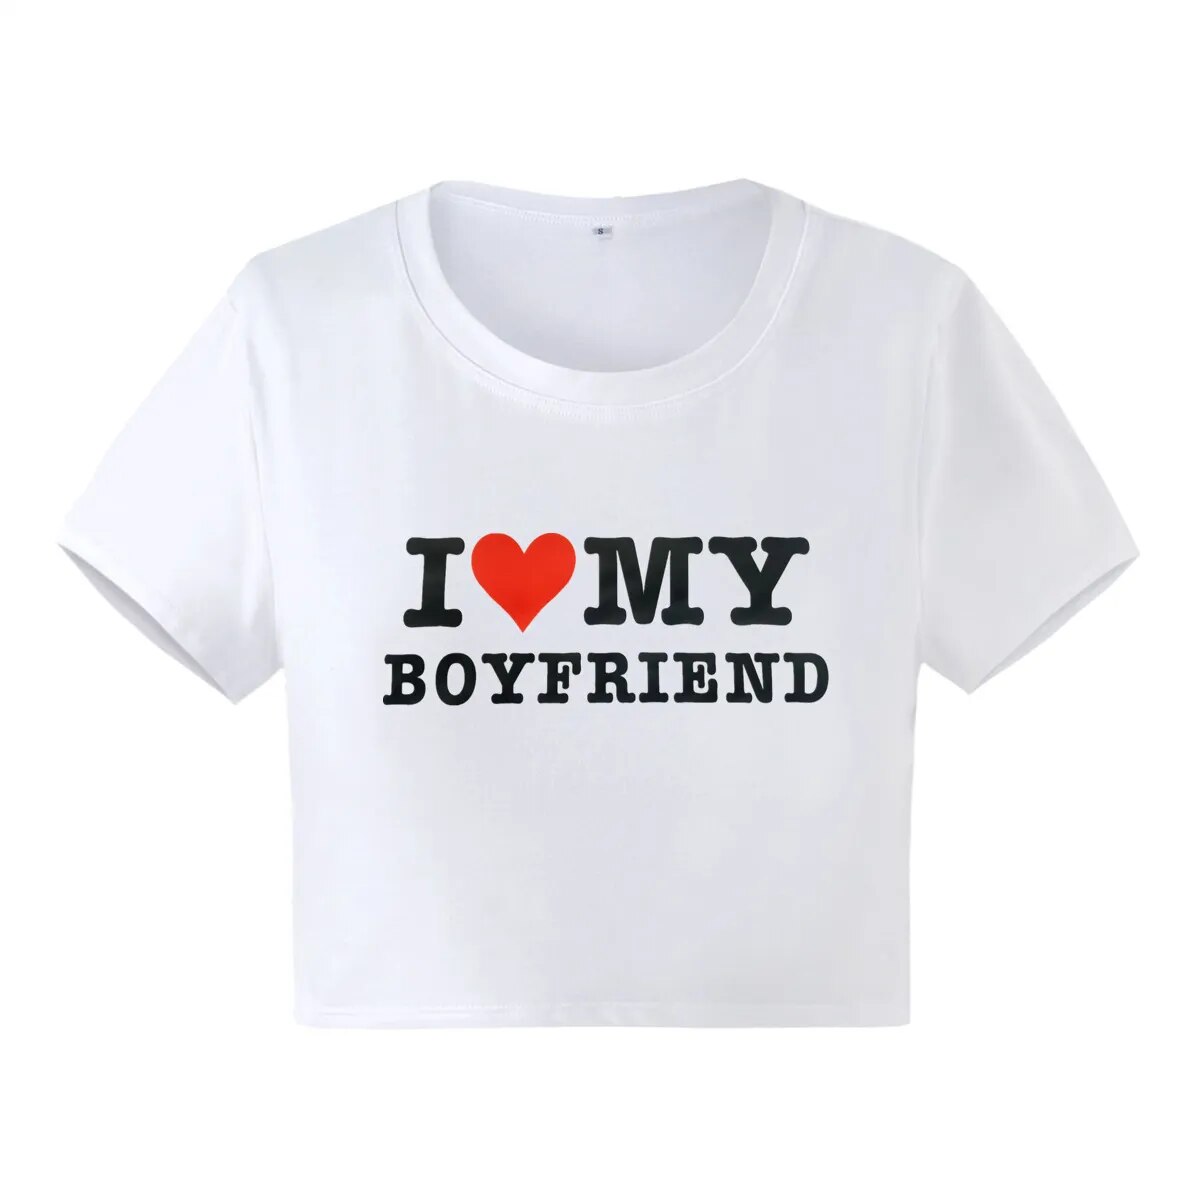 I Love My Boyfriend Womens Crop Top T-Shirt